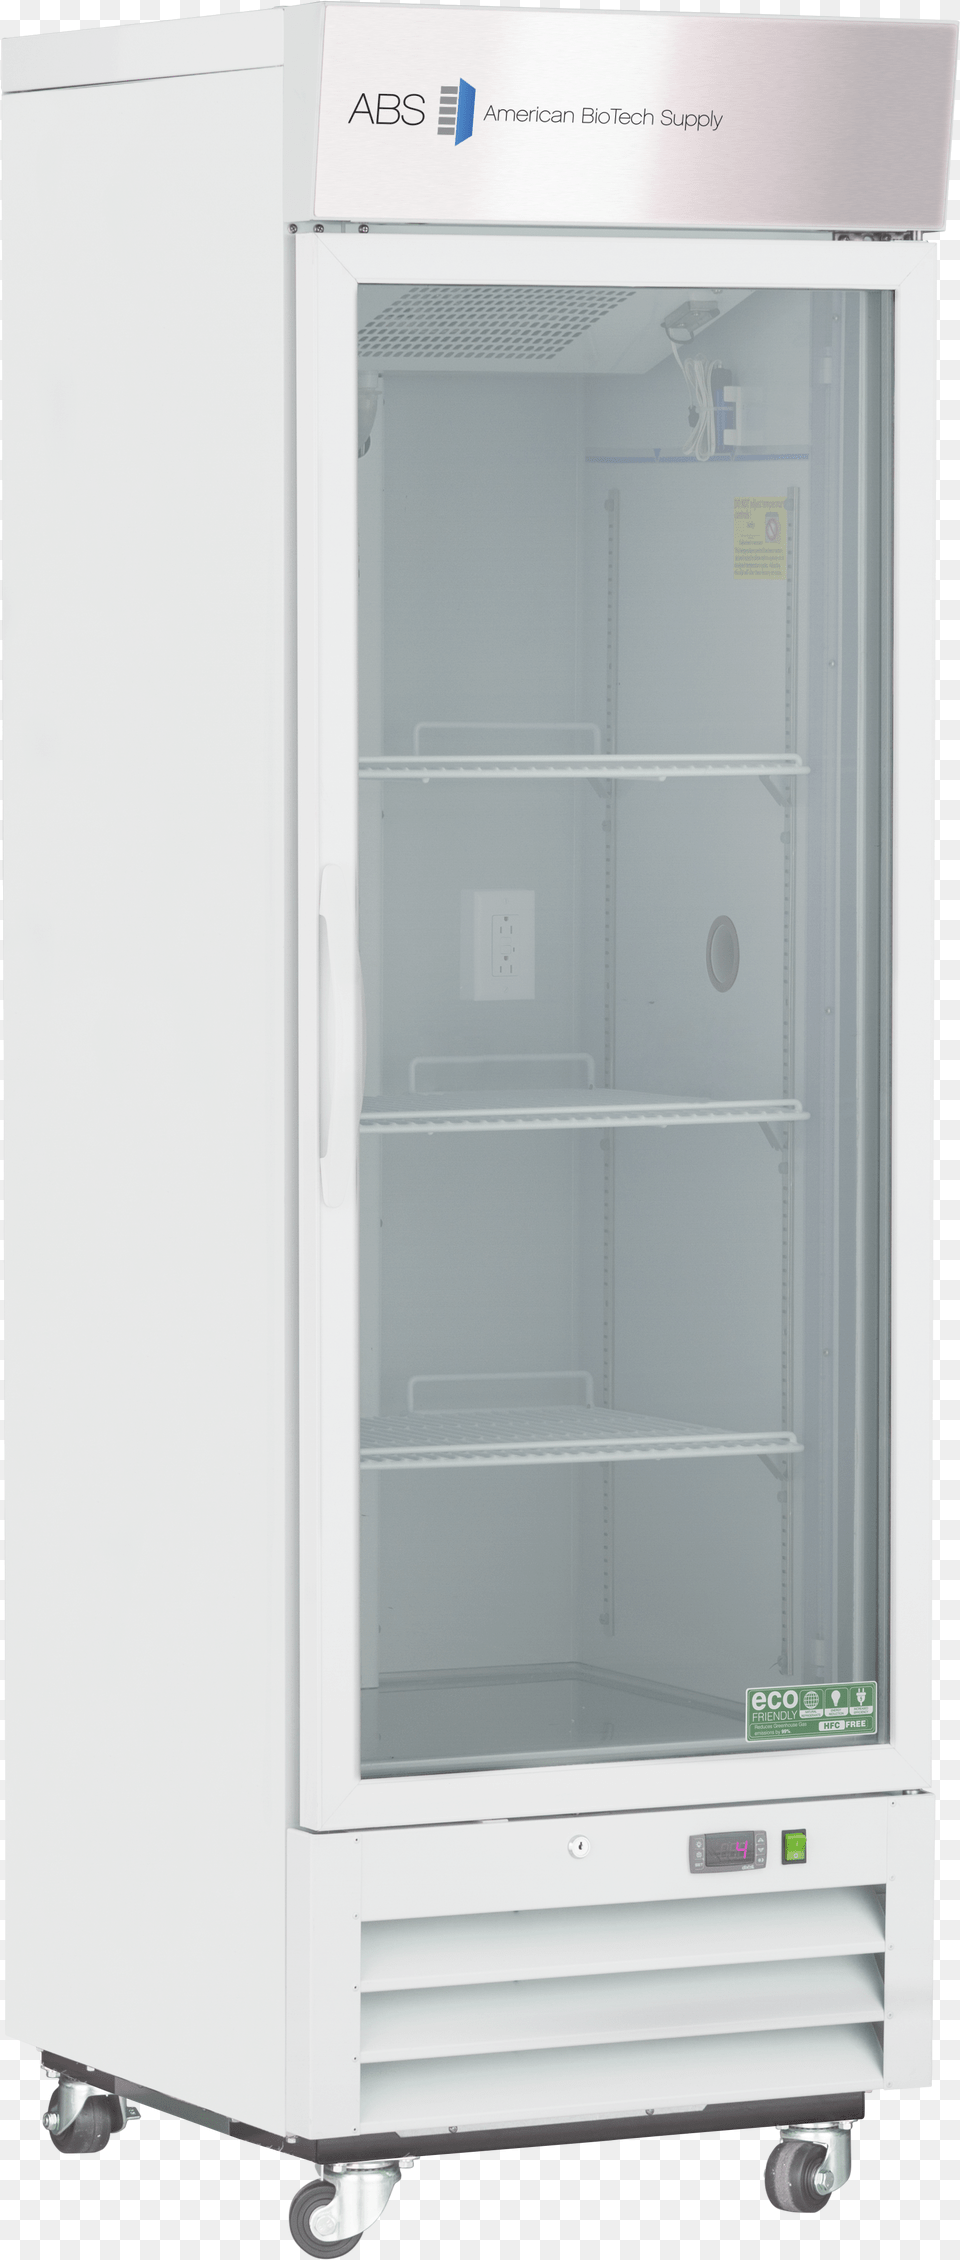 Abt Cs 16 Ext 16 Cu Ft Capacity Standard Glass Door Laboratory Refrigerator Png Image